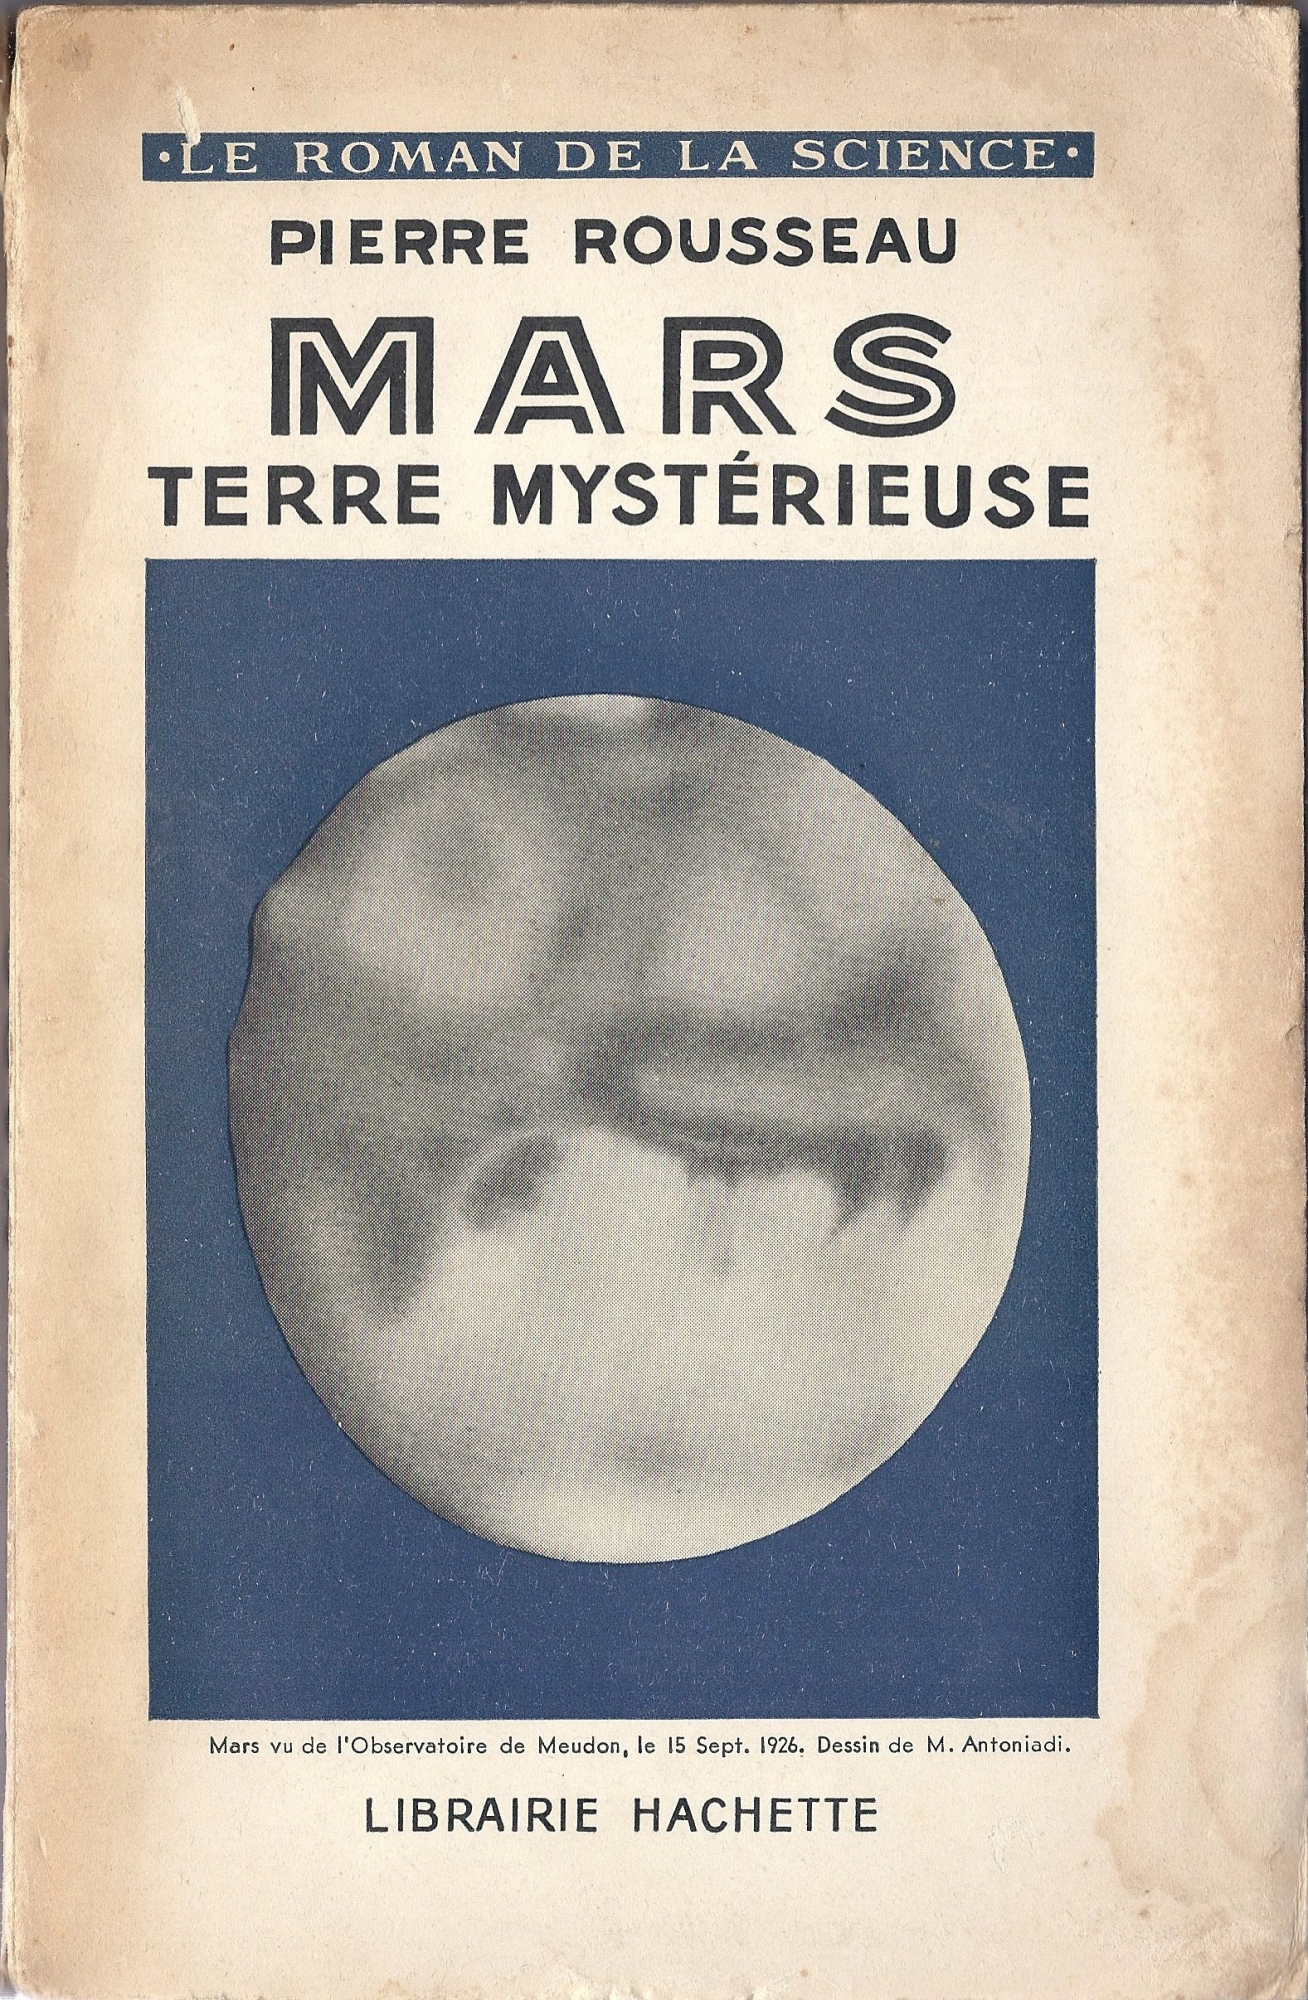 5f85928208186_Mars-Terre-mystrieuse_Pierre-Rousseau_Hachette-1941_couverture.thumb.JPG.223a9688050d4f73b58500245a8a7ab9.JPG